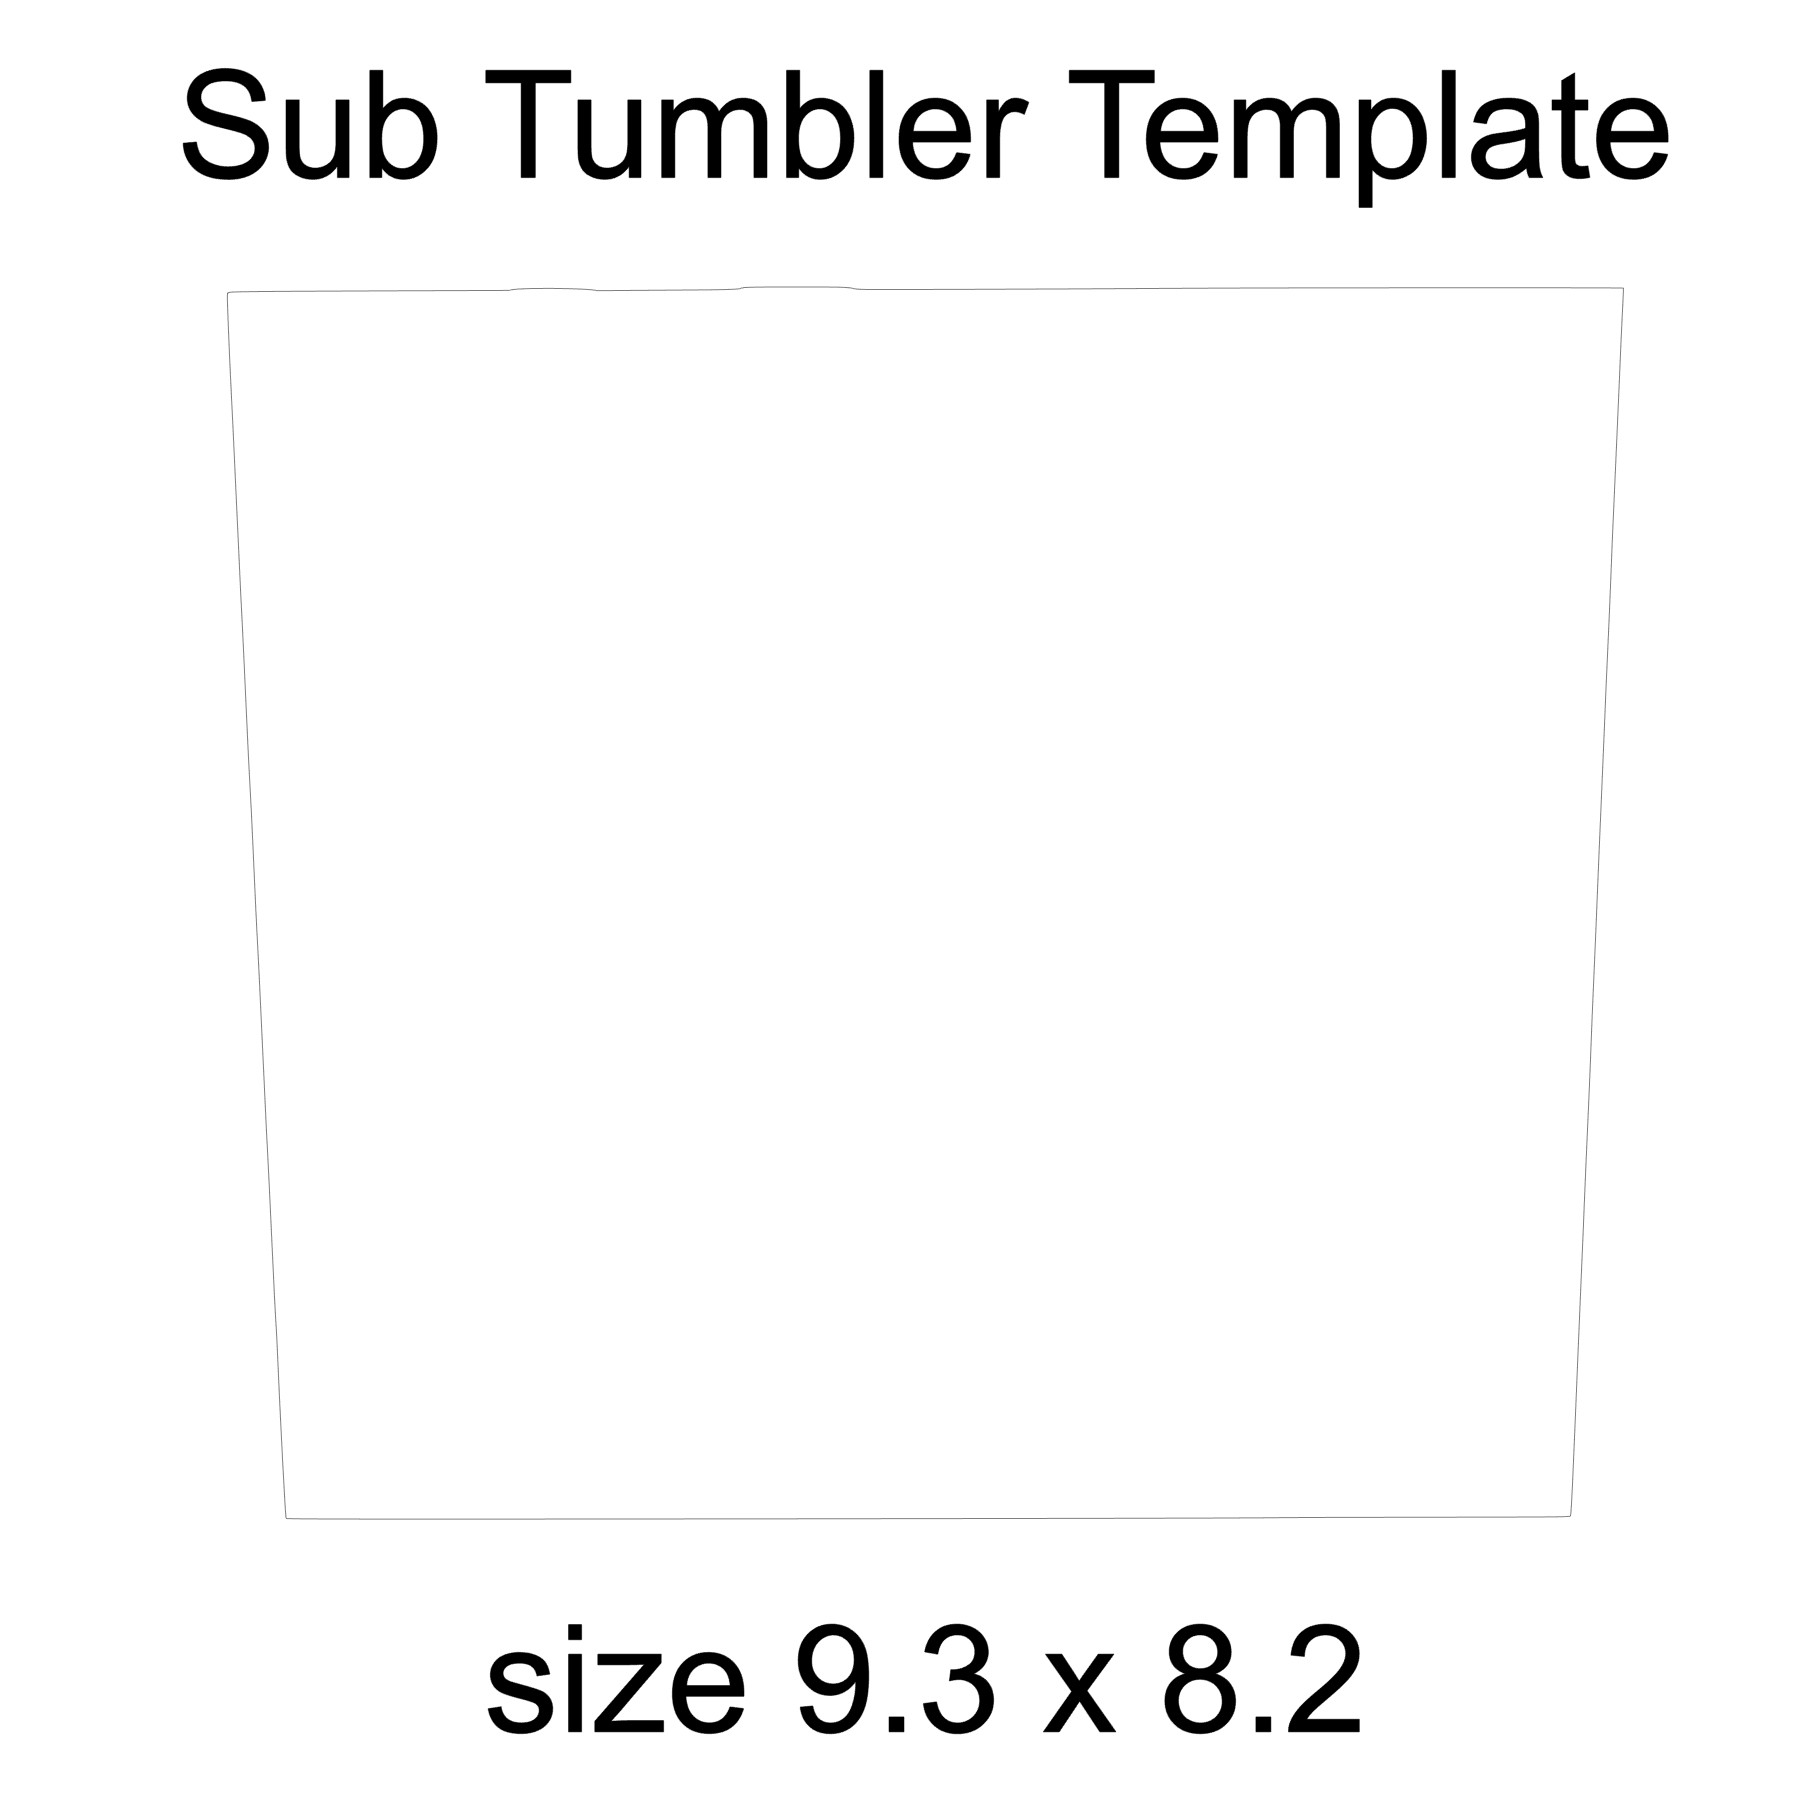 Sublimation Tumbler Template